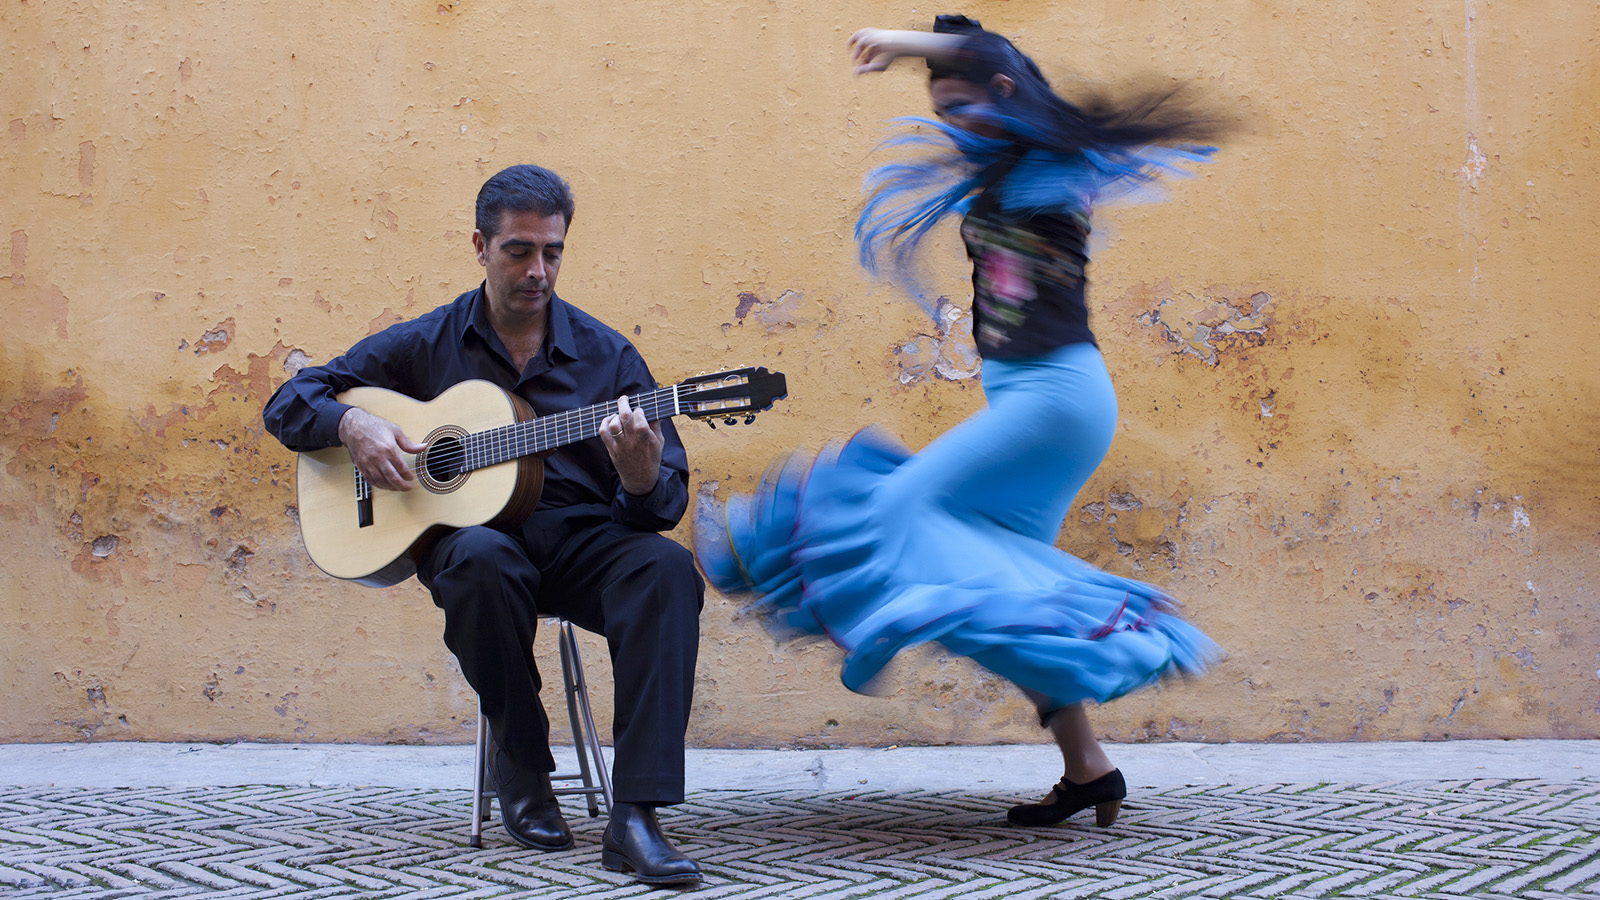 Flamenco dancer and guitarist